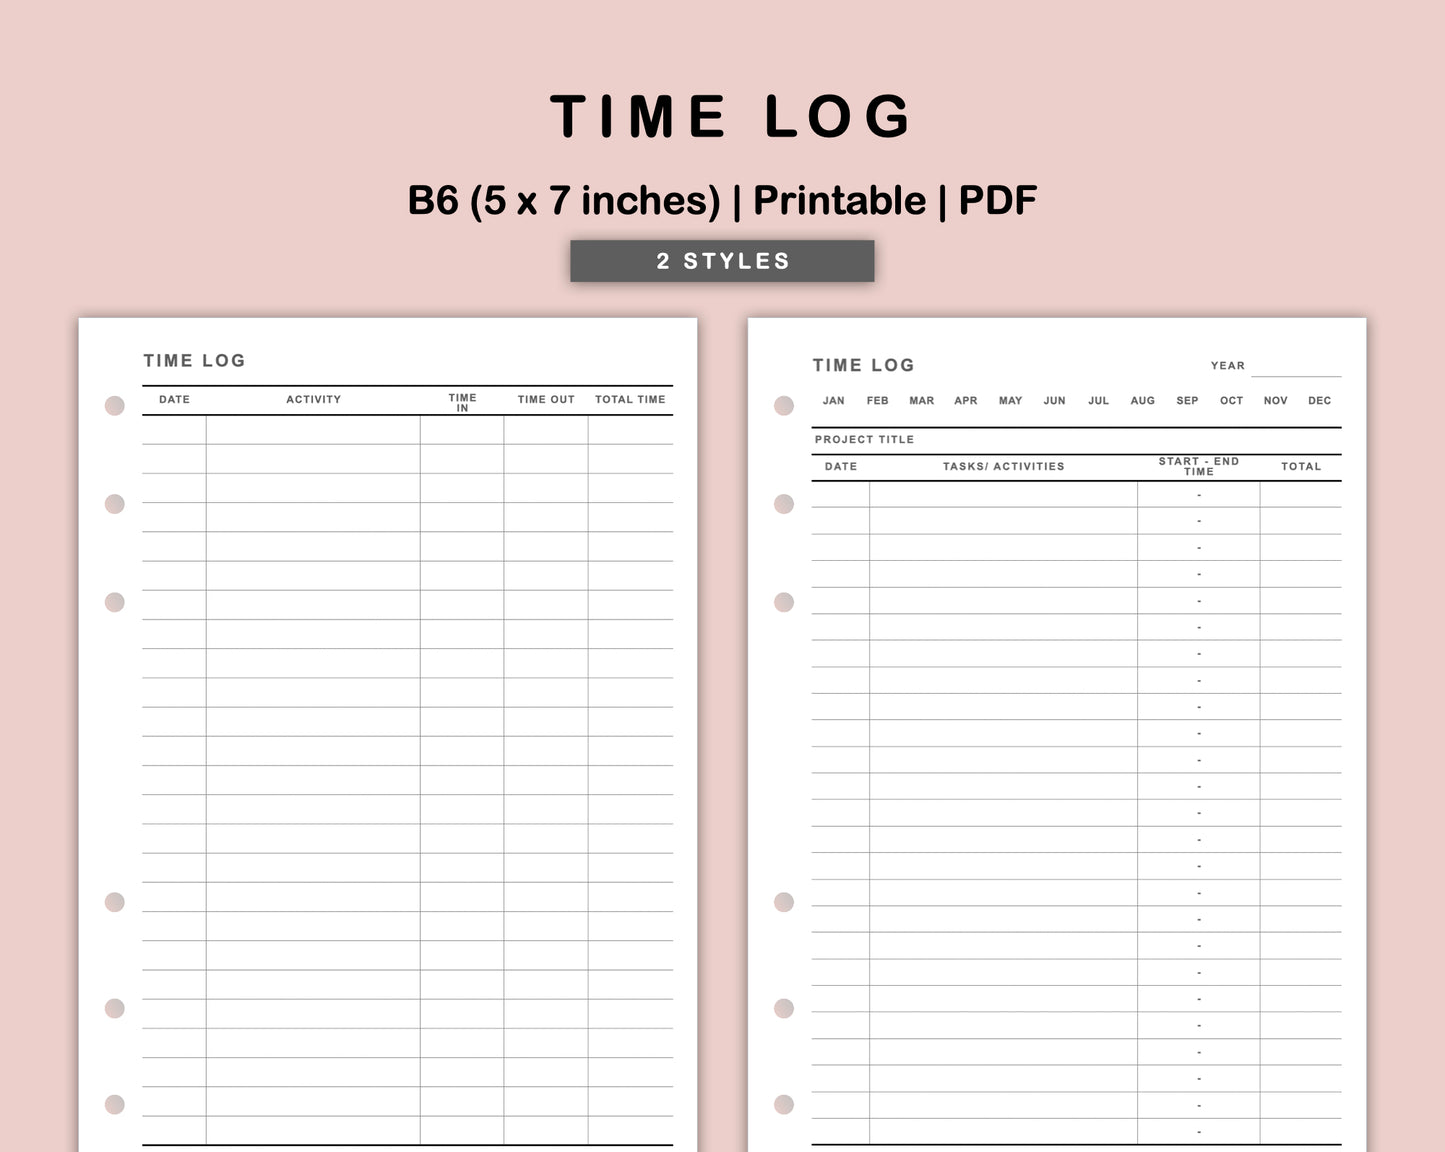 B6 Inserts - Time Log